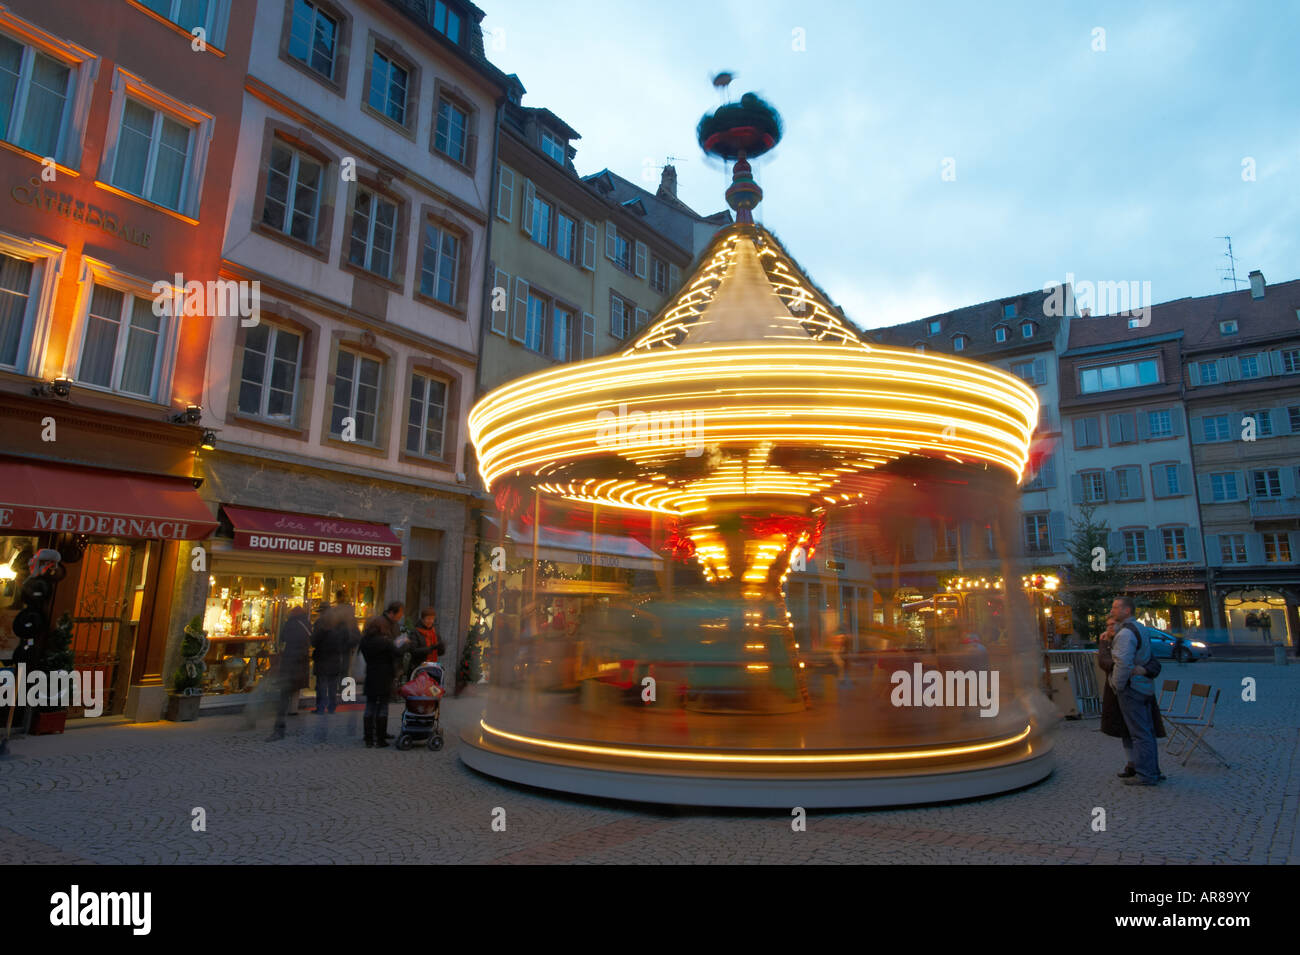 Carousel in the Christmas market at dusk - Strasbourg France Stock Photo